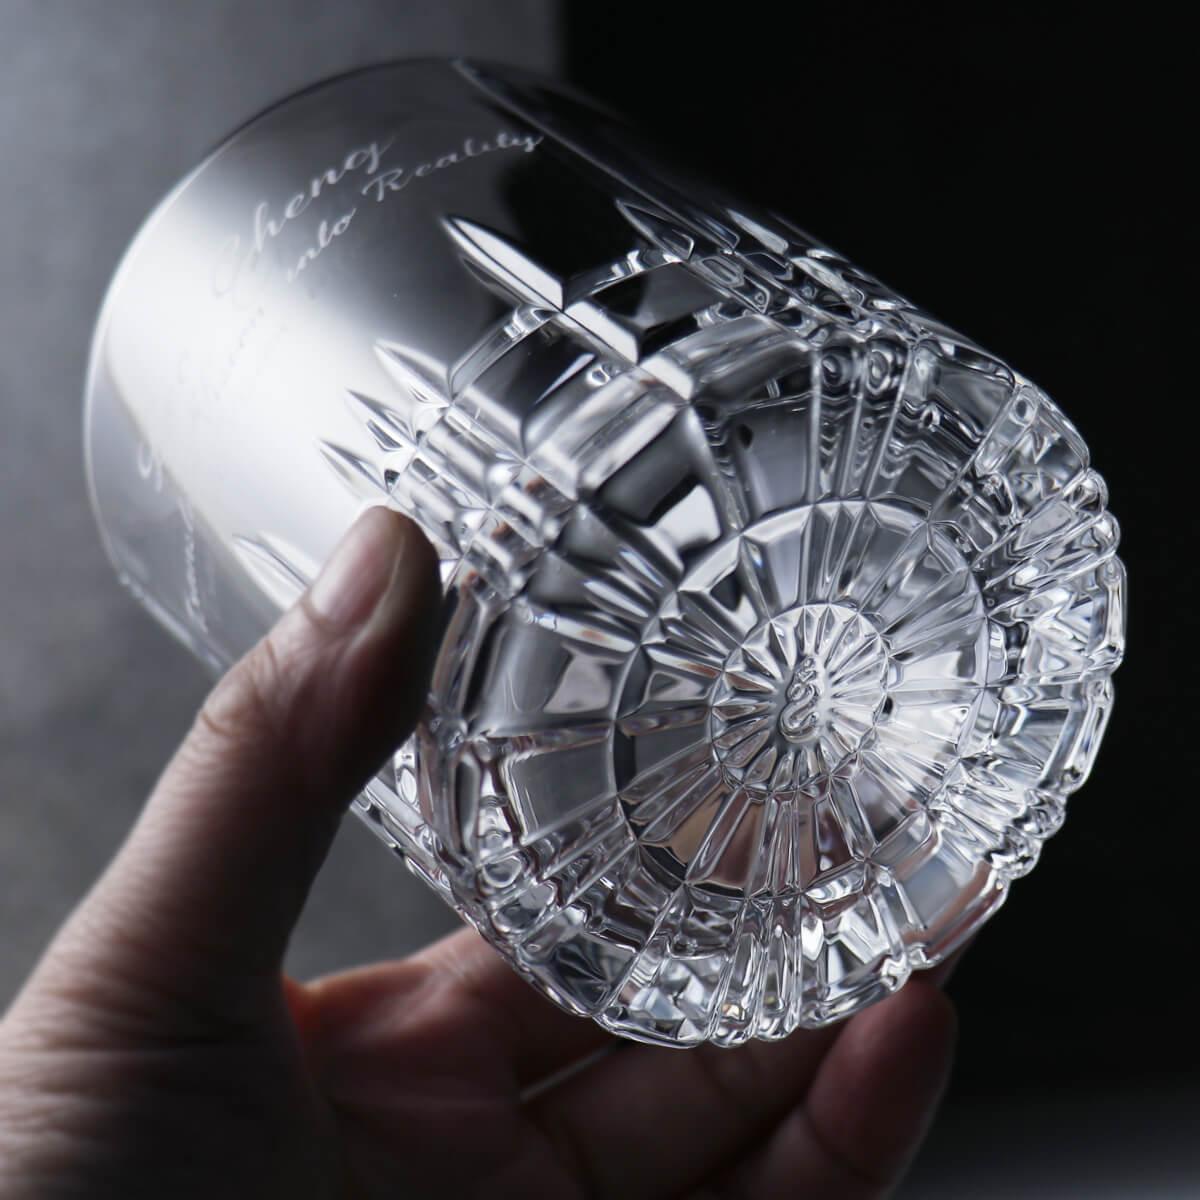 368cc【德國Spiegelau】(多文字版)Serve威士忌杯 - MSA玻璃雕刻